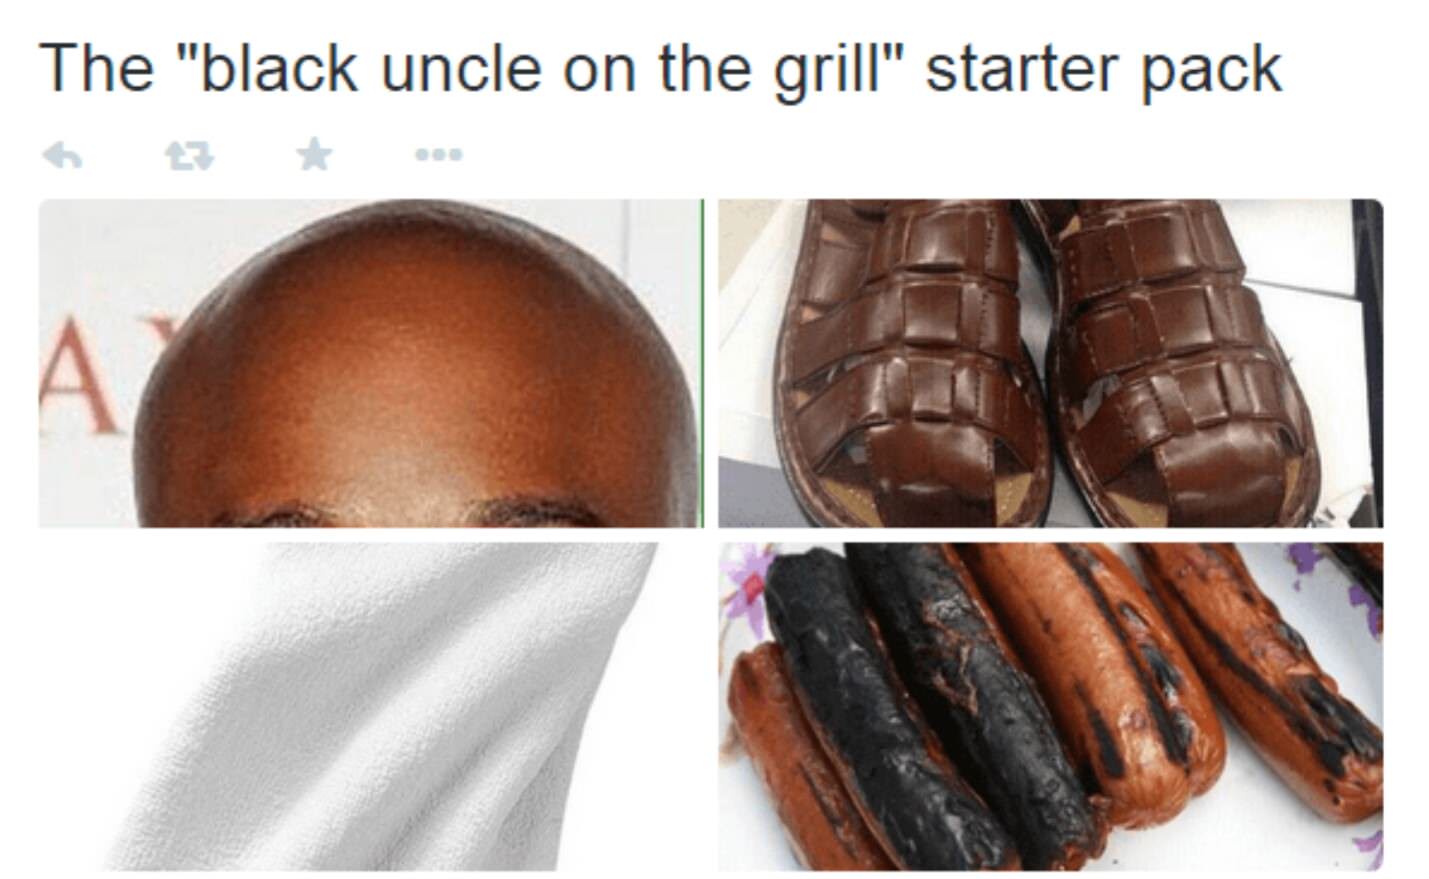 starter pack - black uncle on the grill starter pack - The "black uncle on the grill" starter pack